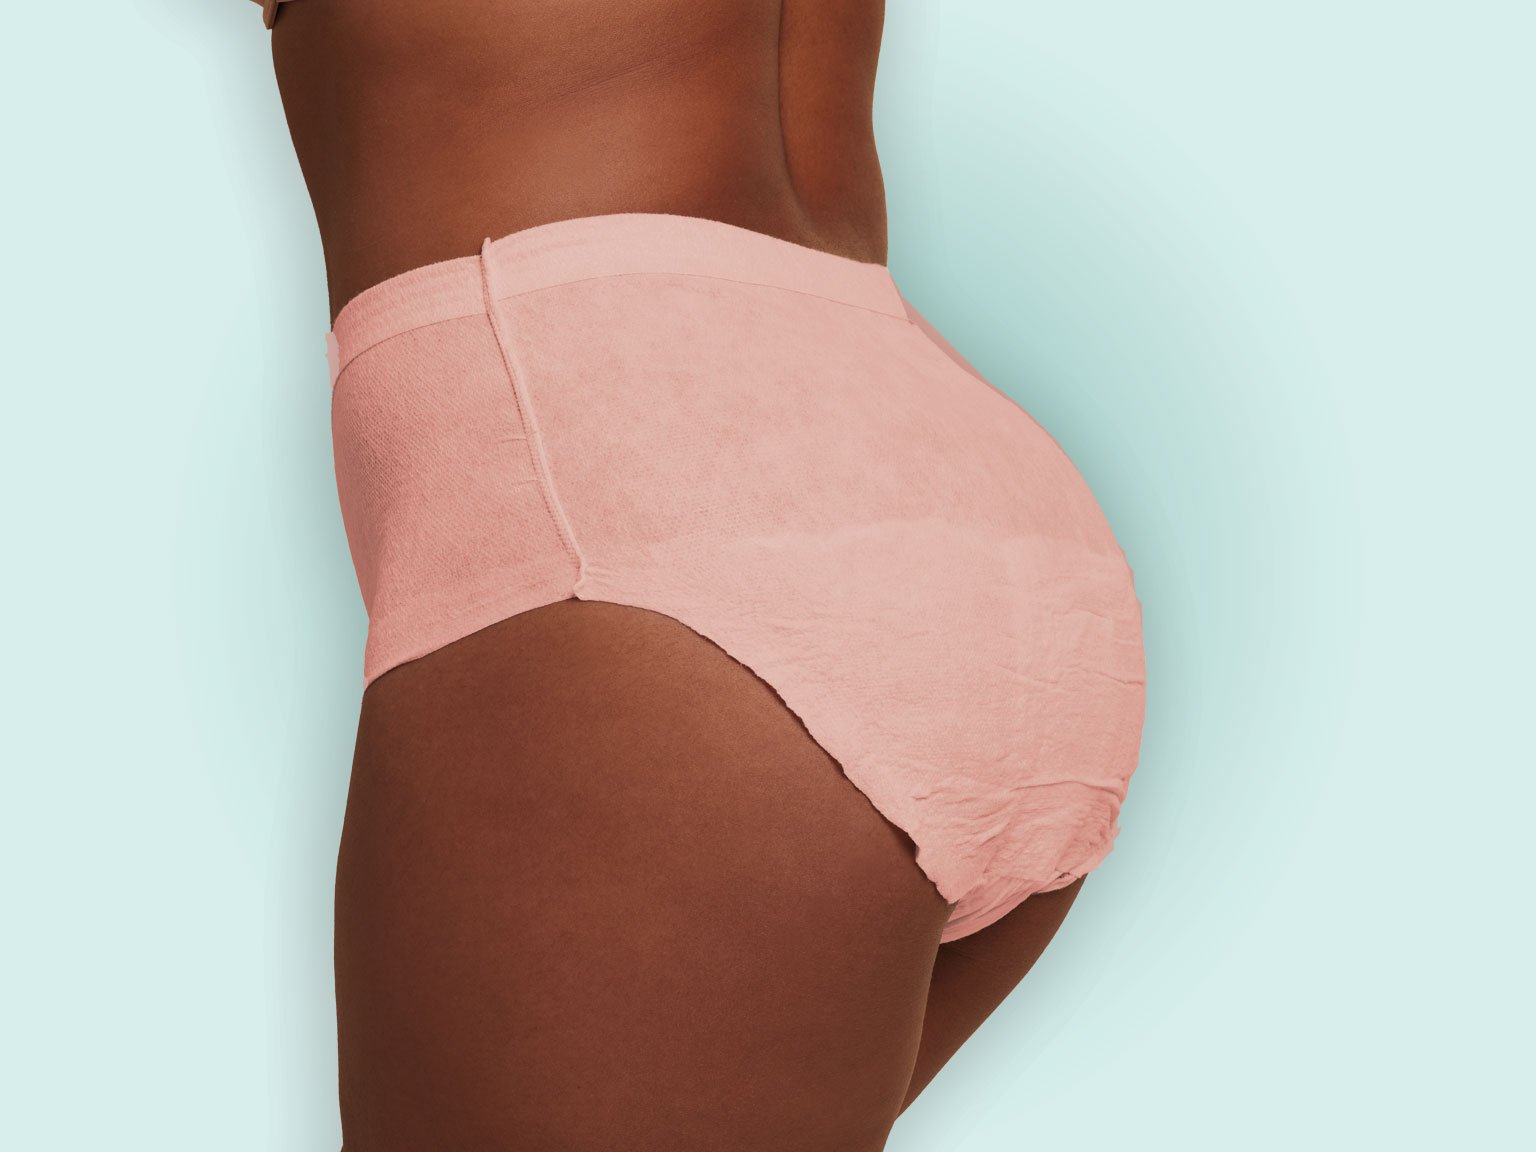 Depend Silhouette Incontinence Underwear for Women - Maximum Absorbency -  L/XL